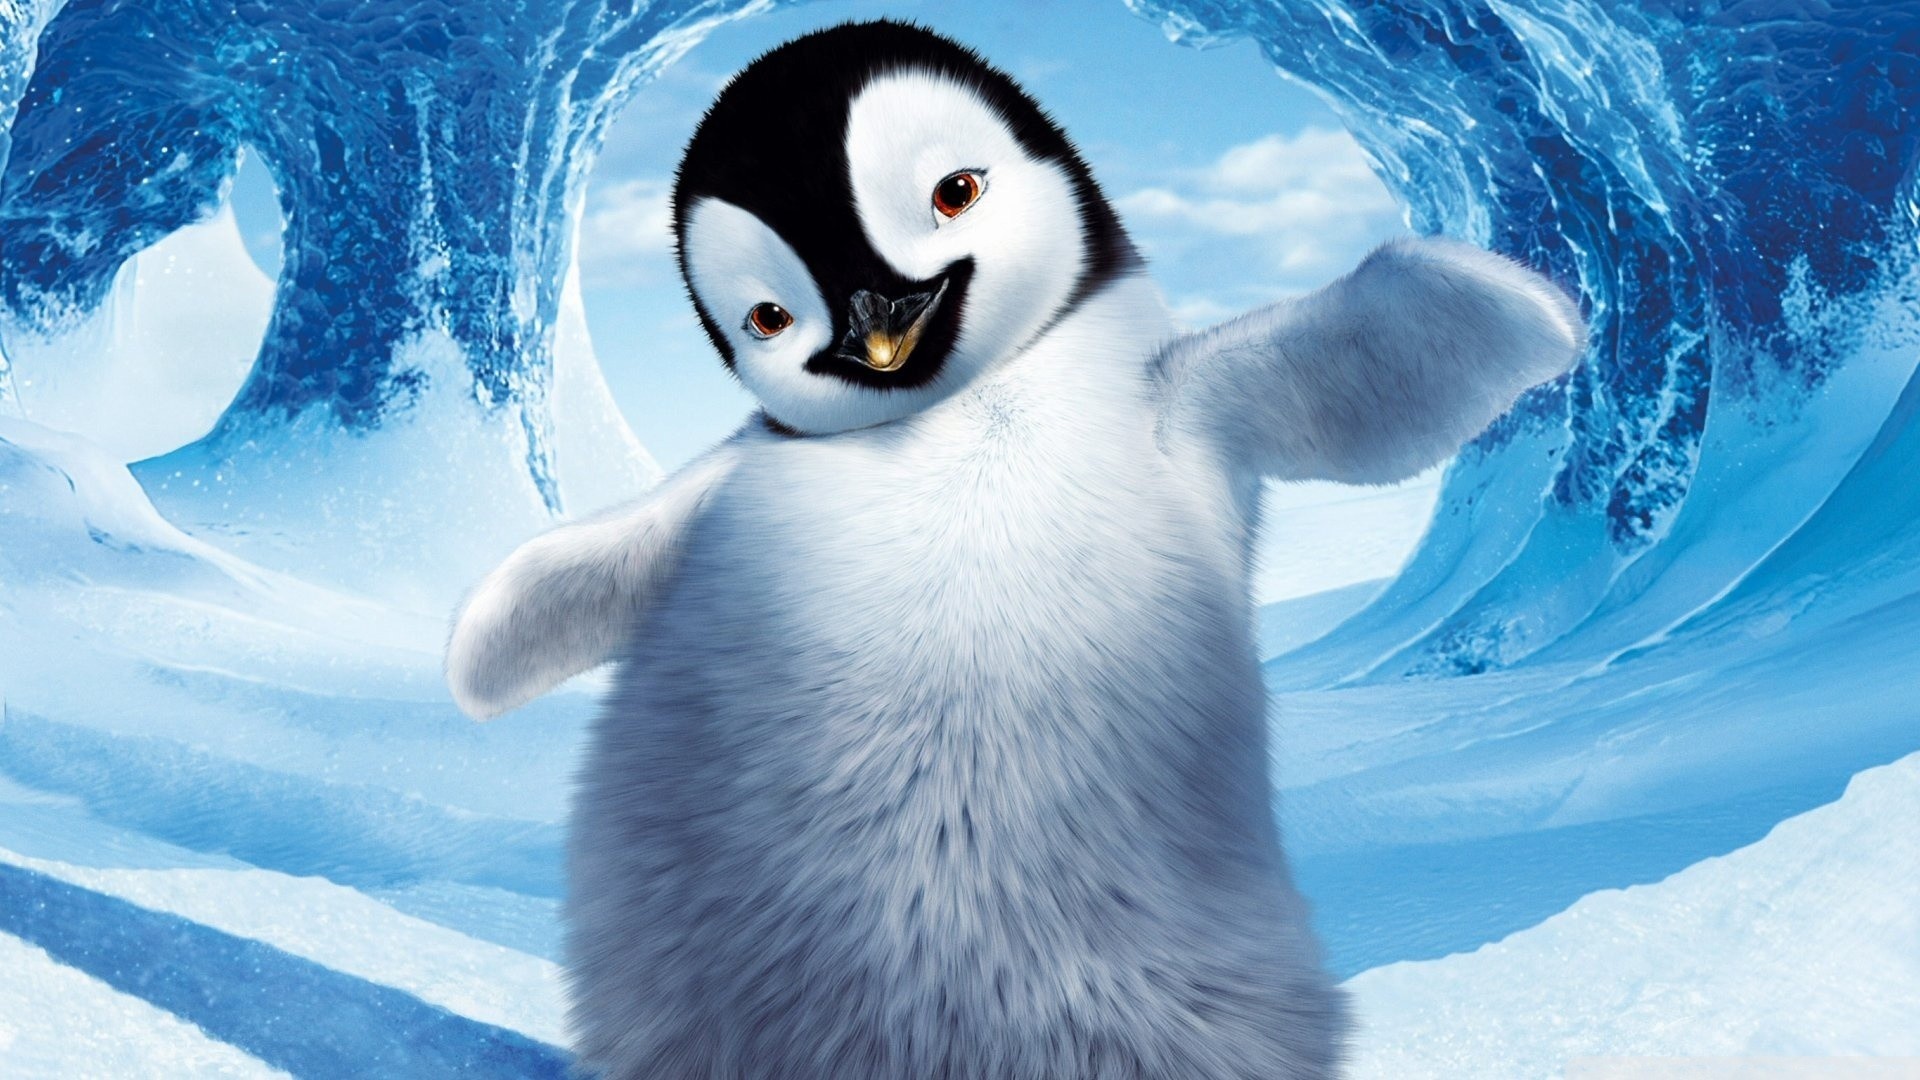 Baby Penguin Wallpaper Image